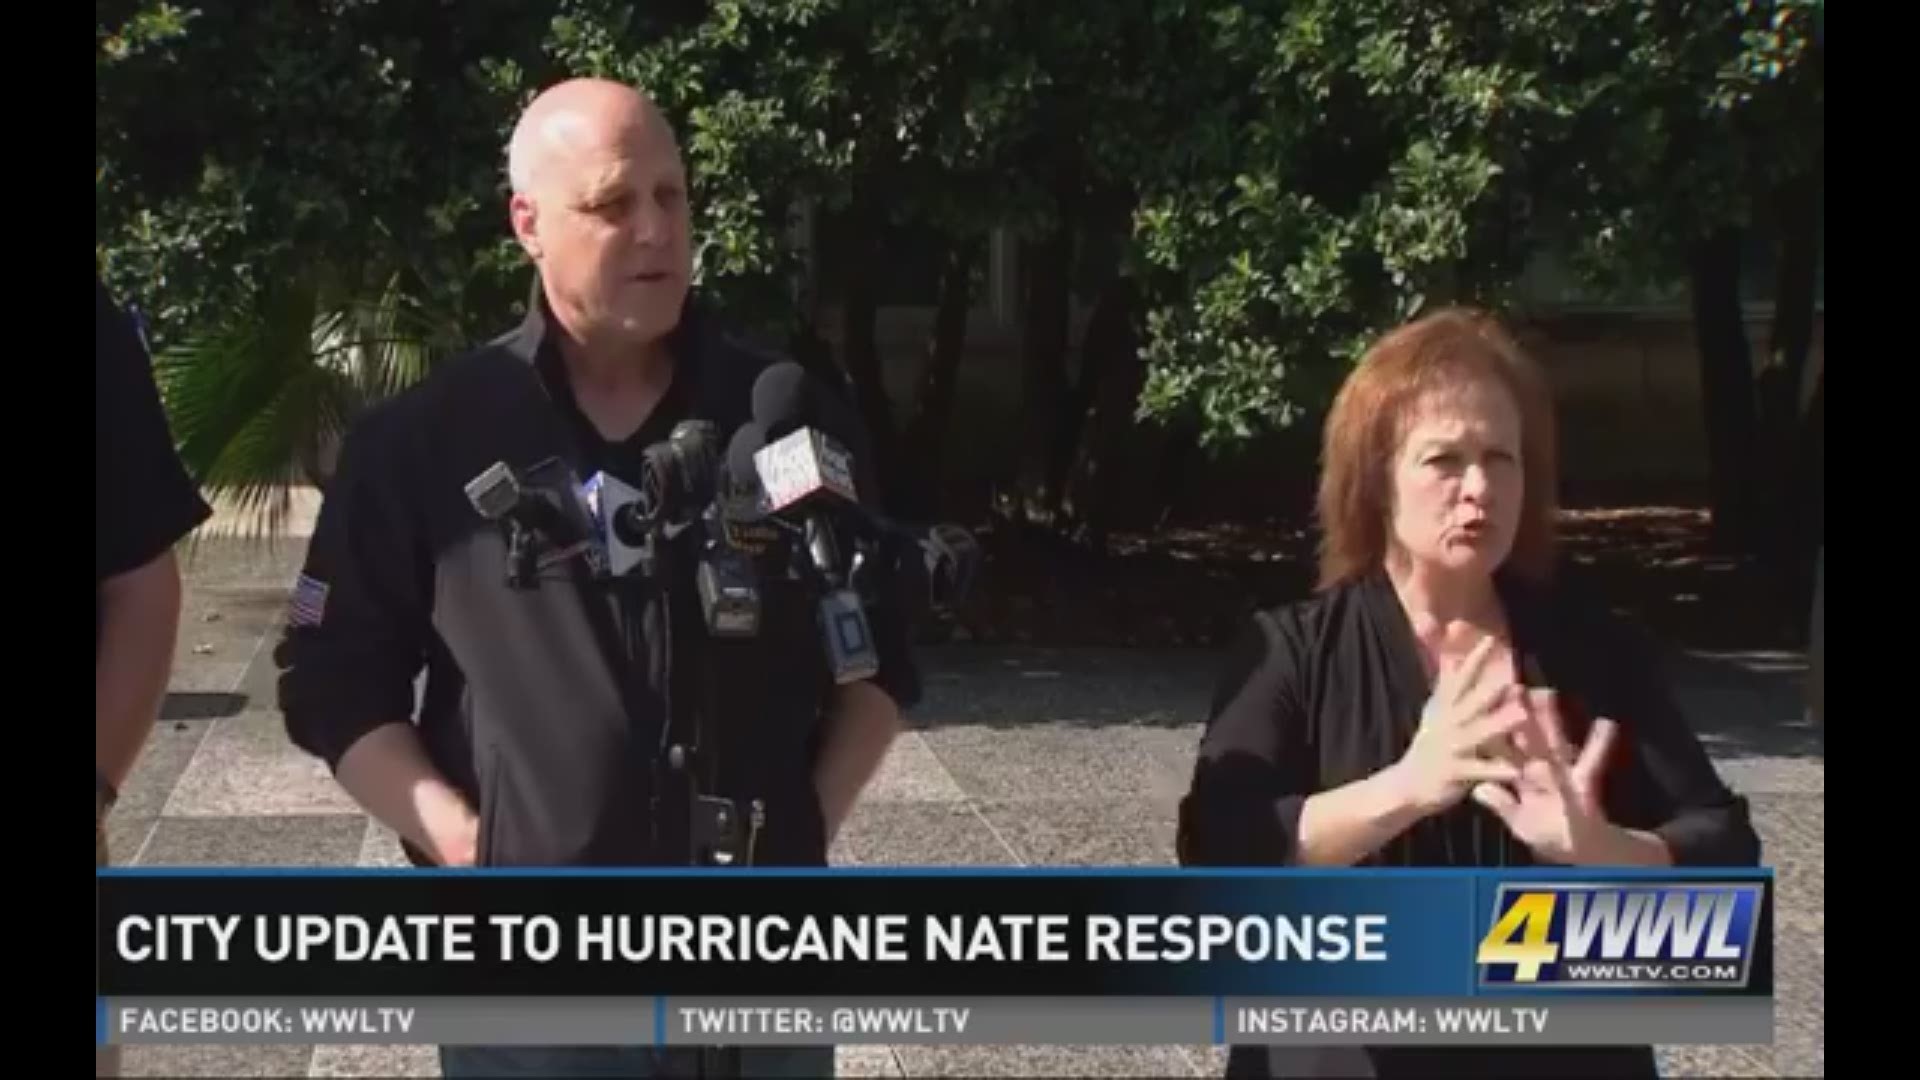 Mayor Landrieu gives post-Hurricane Nate update